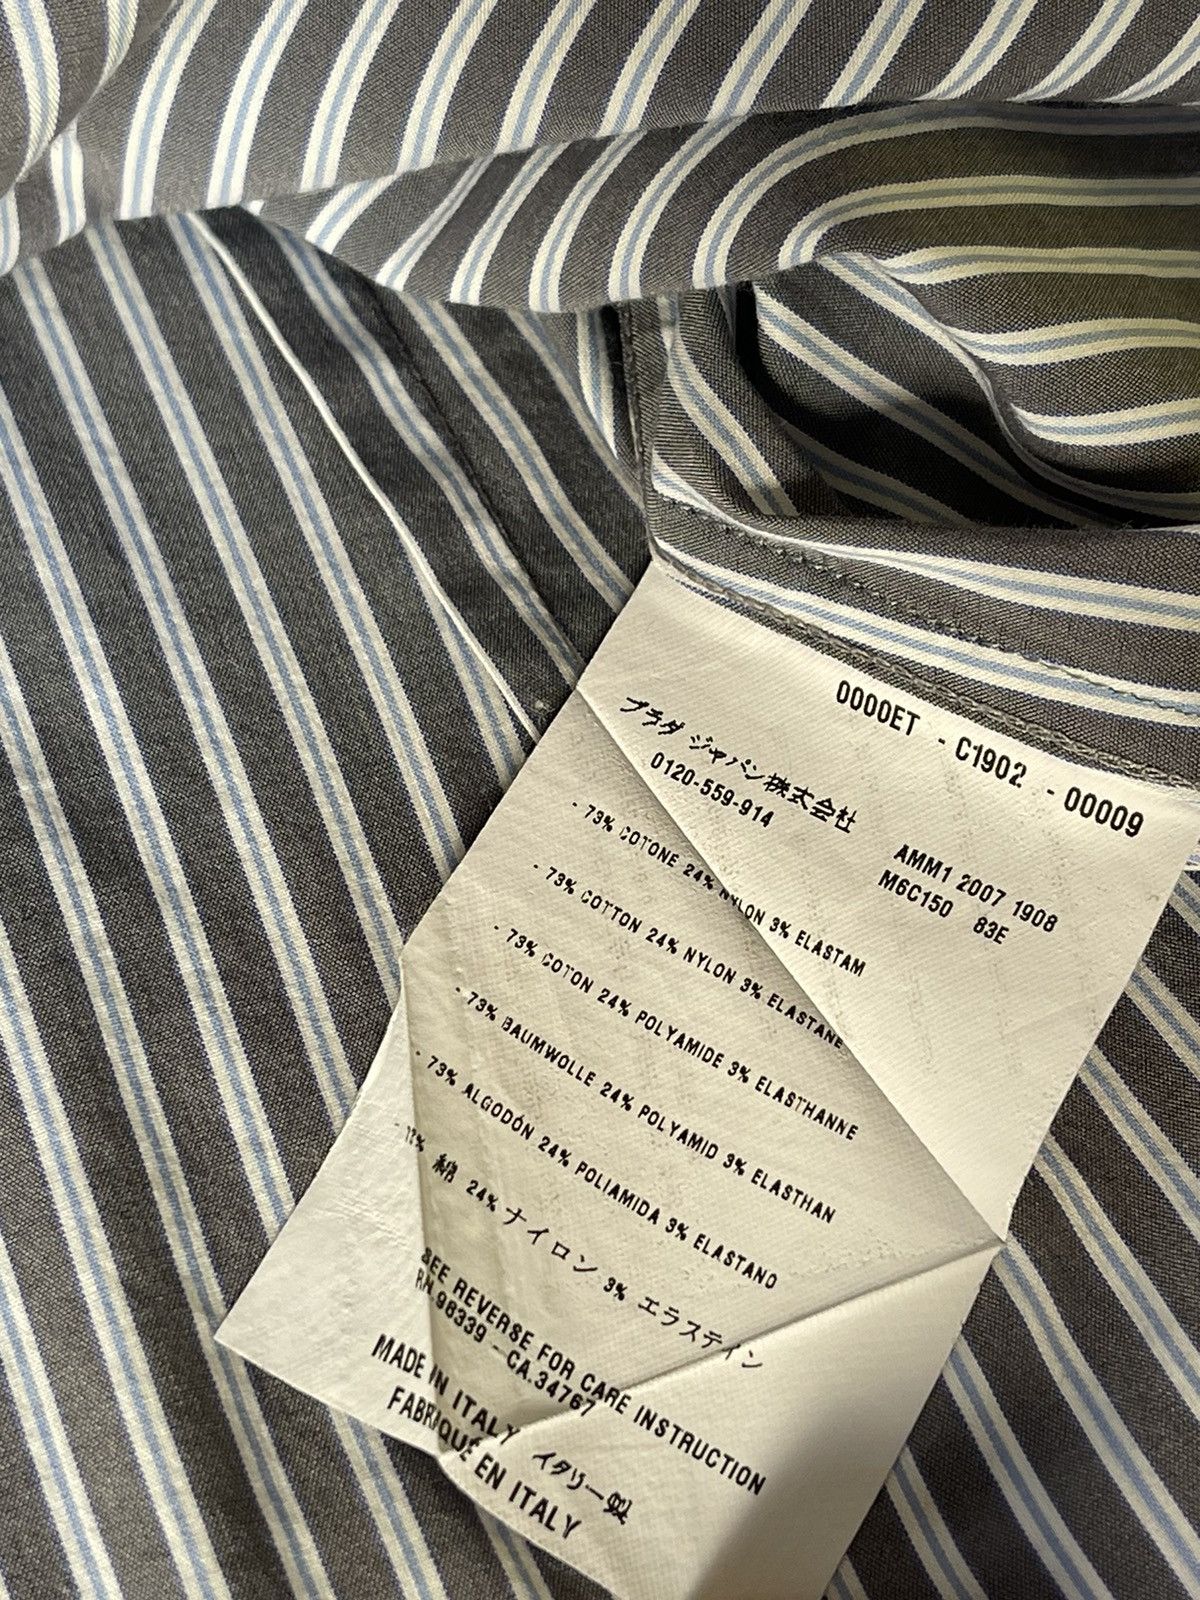 Miu Miu Miu Miu Grey/White/Blue Stripe Button-up Shirt Size XS / US 0-2 / IT 36-38 - 5 Preview